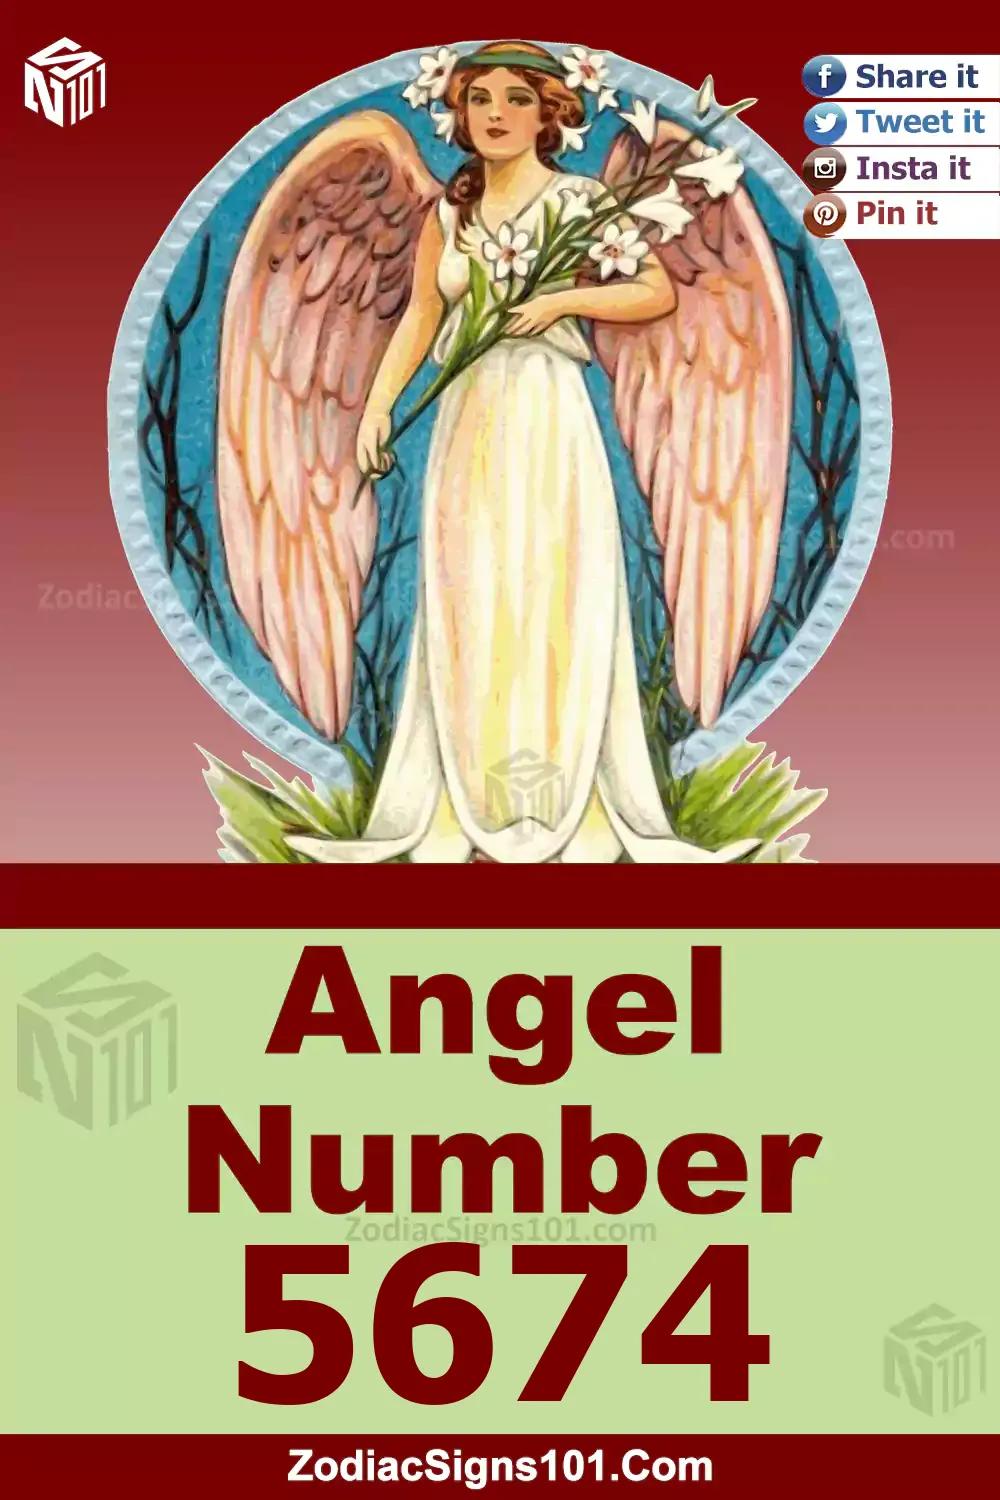 5674-Angel-Number-Meaning.jpg